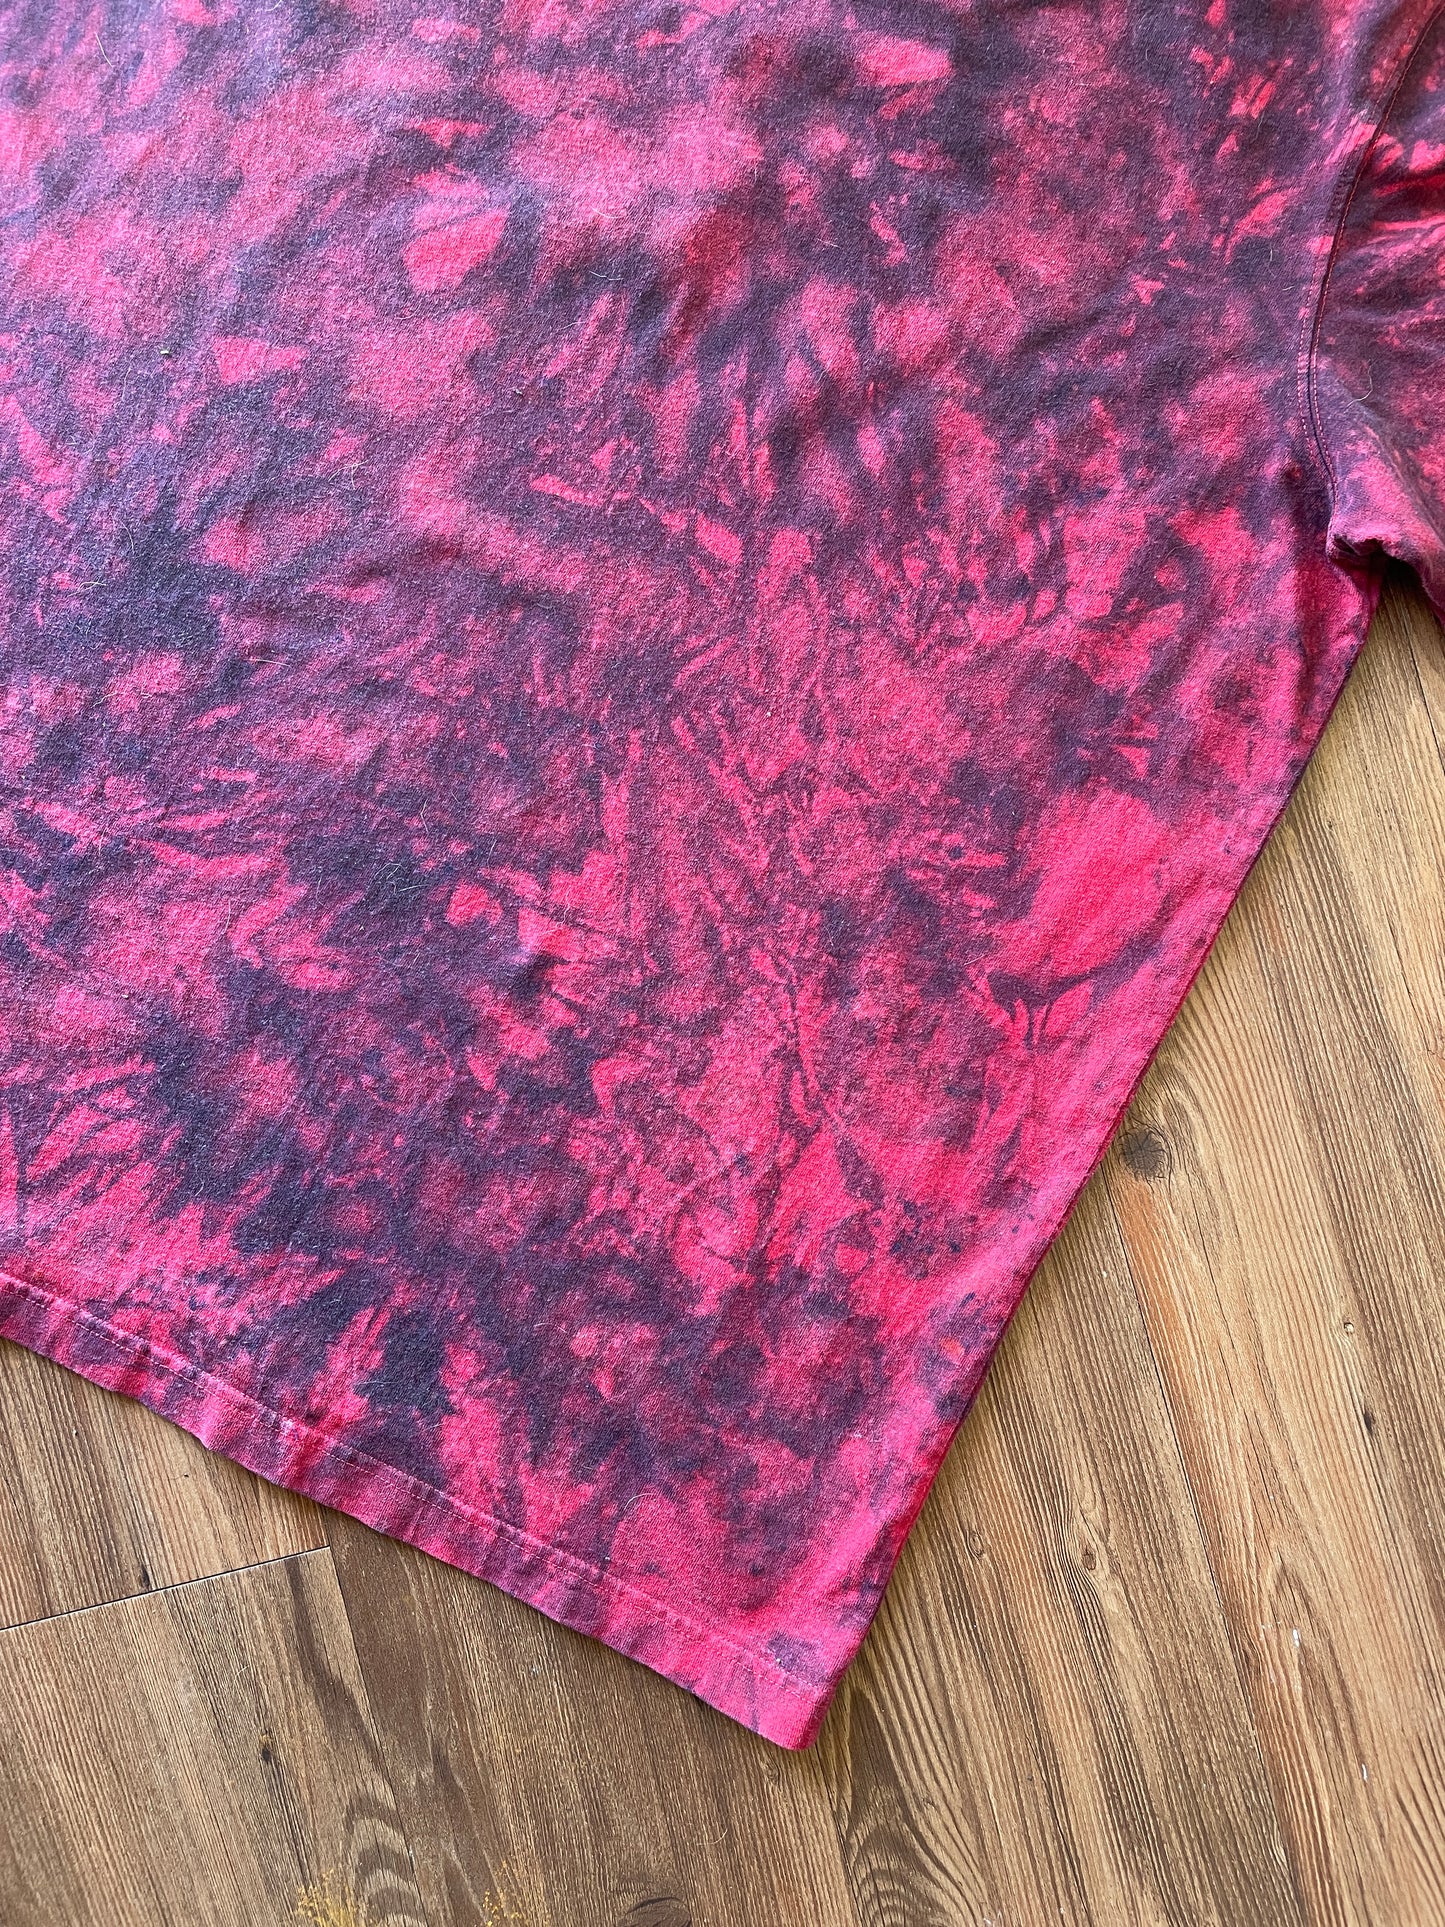 3XL Men’s Red and Black Carhartt Galaxy Dyed Handmade Tie Dye Short Sleeve T-Shirt